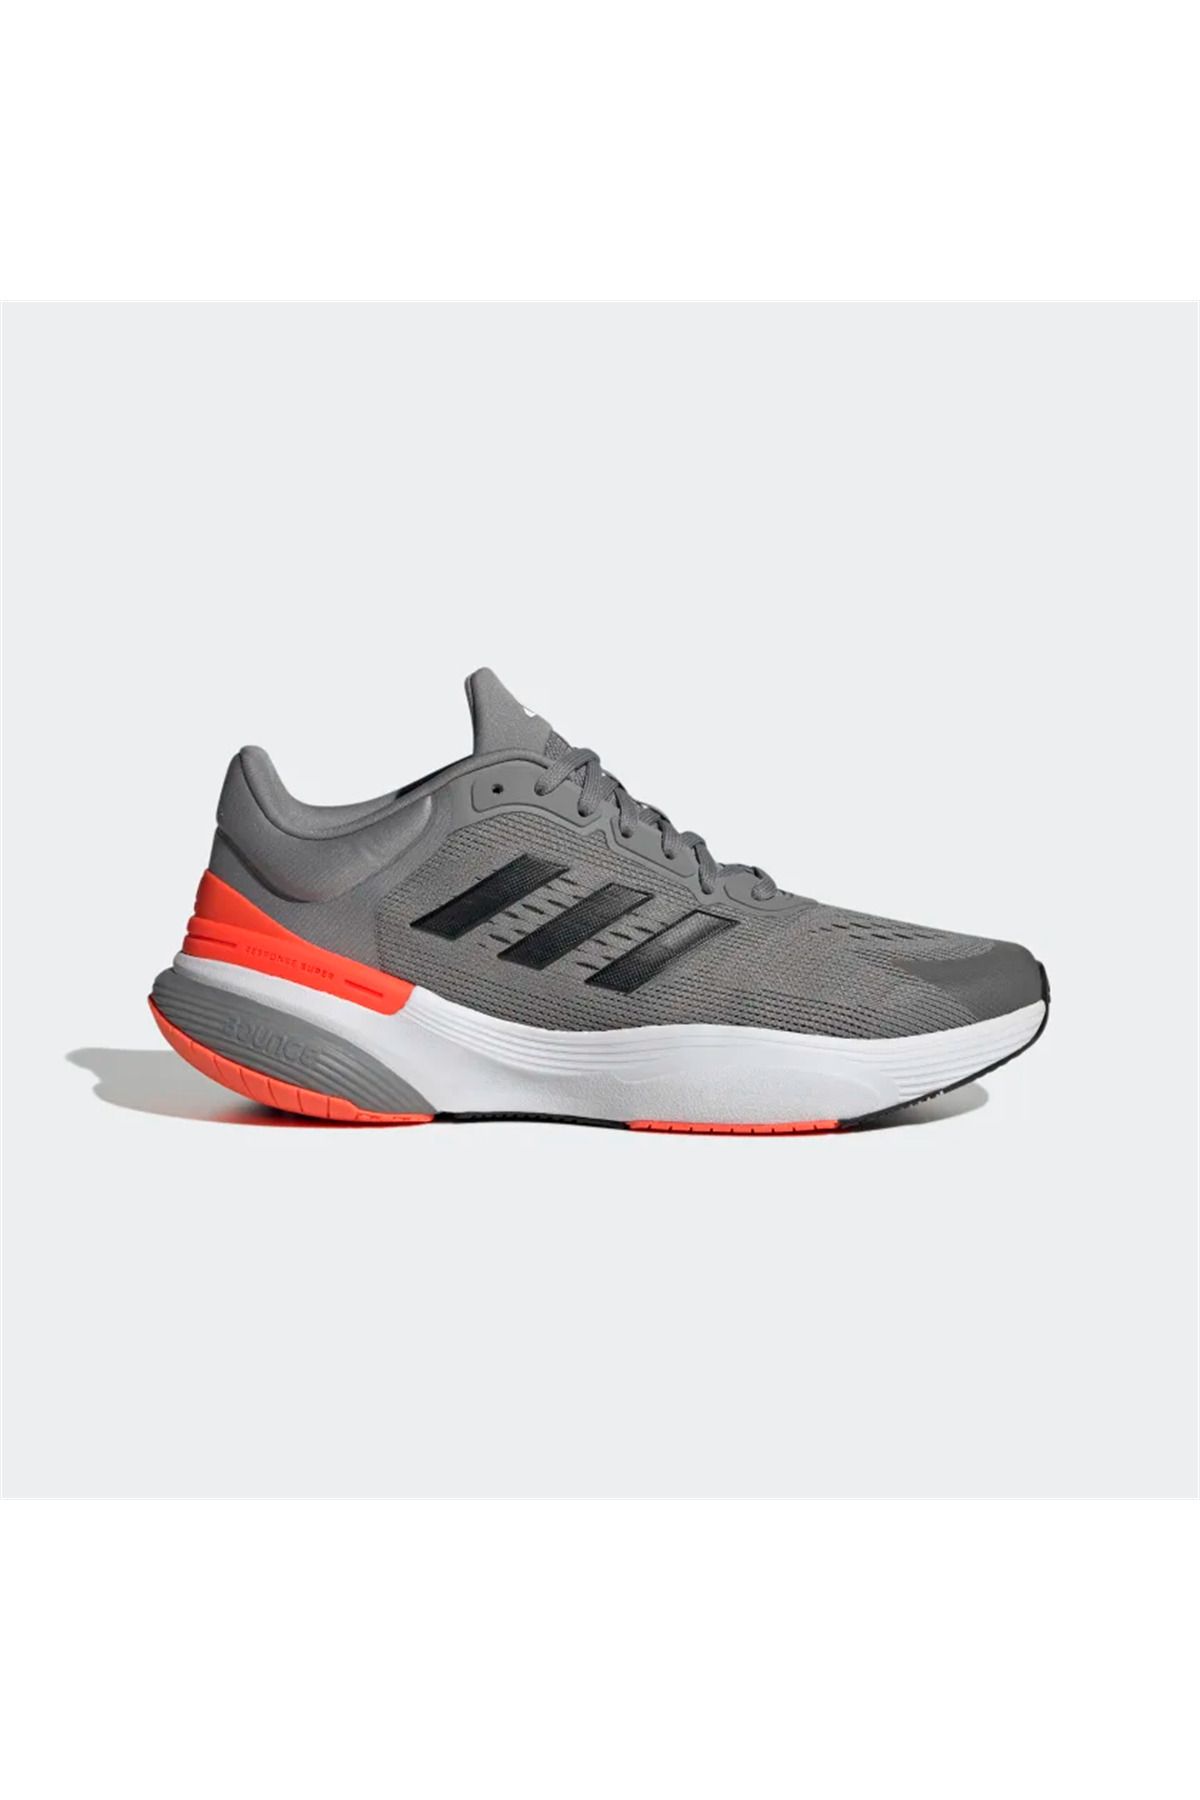 adidas Response Super 3.0 Erkek Koşu Ayakkabı